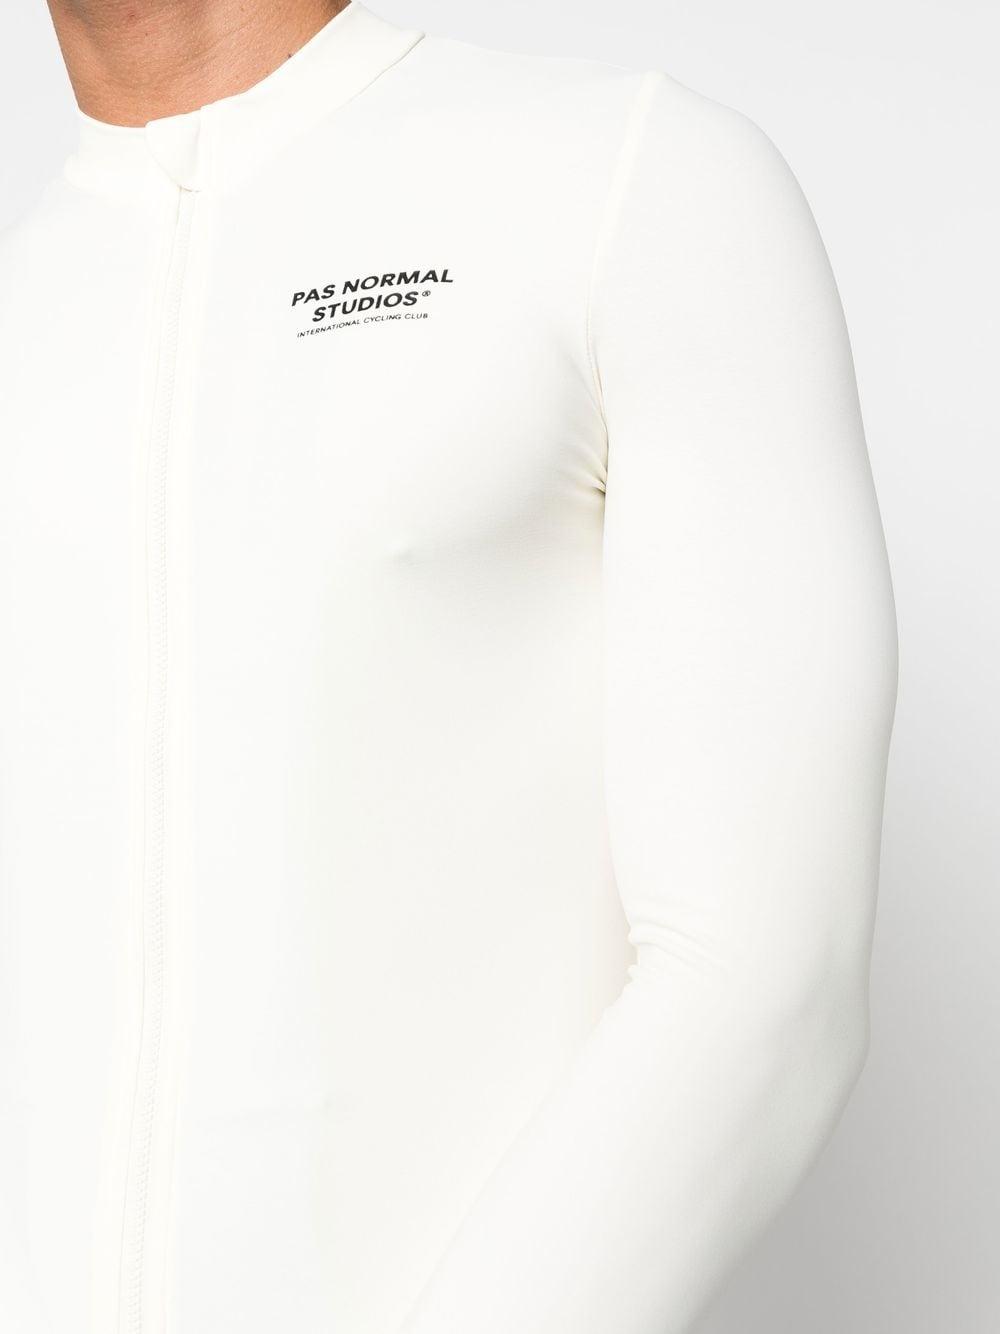 Pas Normal Studios Mechanism Long-sleeve Jersey in White for Men 